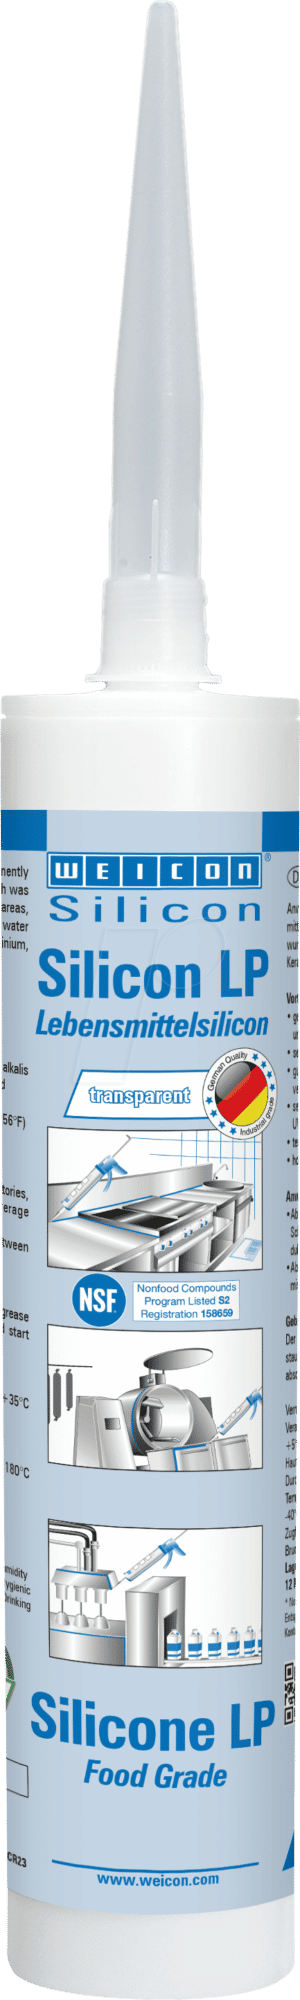 WEICON 13008310 - WEICON Silicon LP